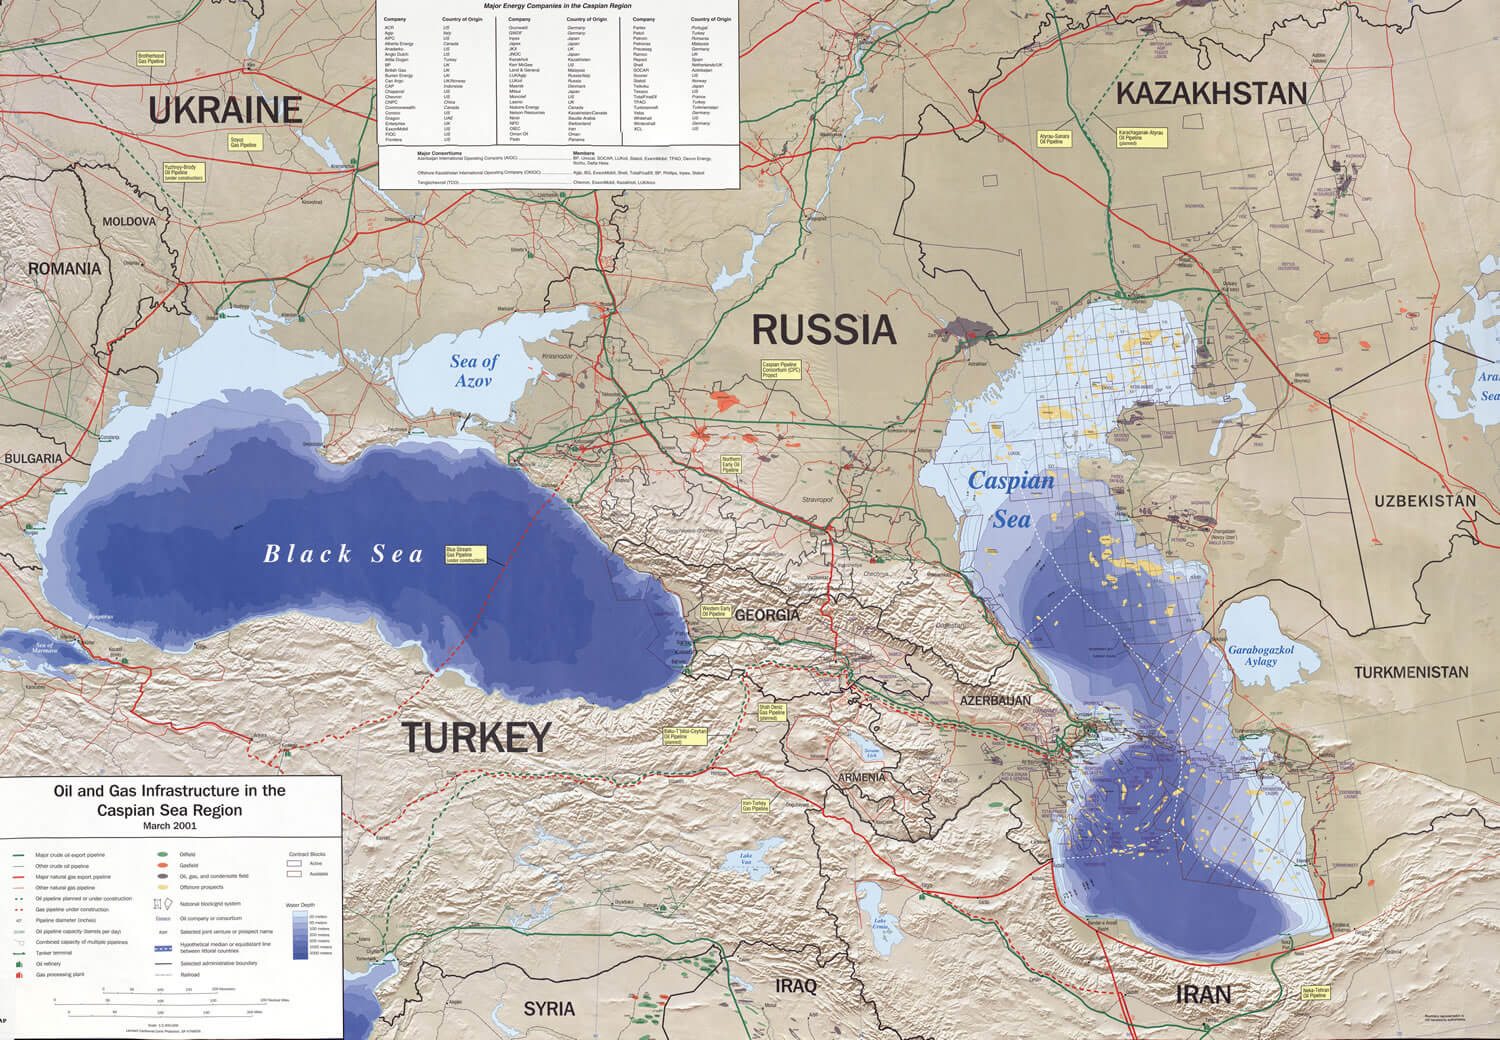 azerbeycan hazar deniz petrol dogal gaz